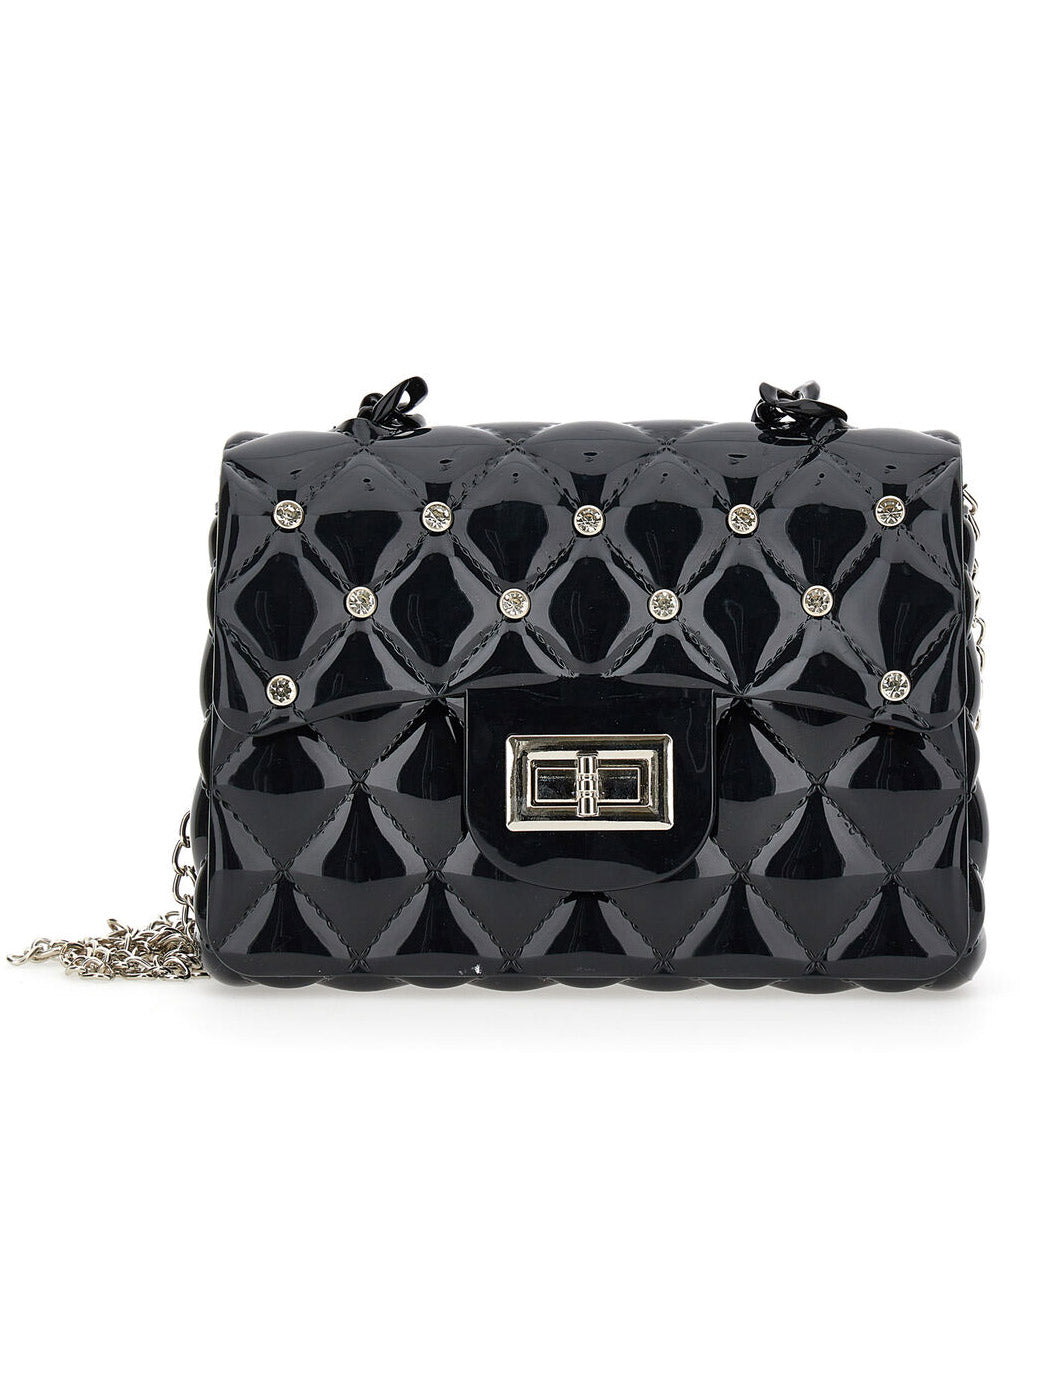 MONNALISA Black handbag with rhinestone for girl-17A005